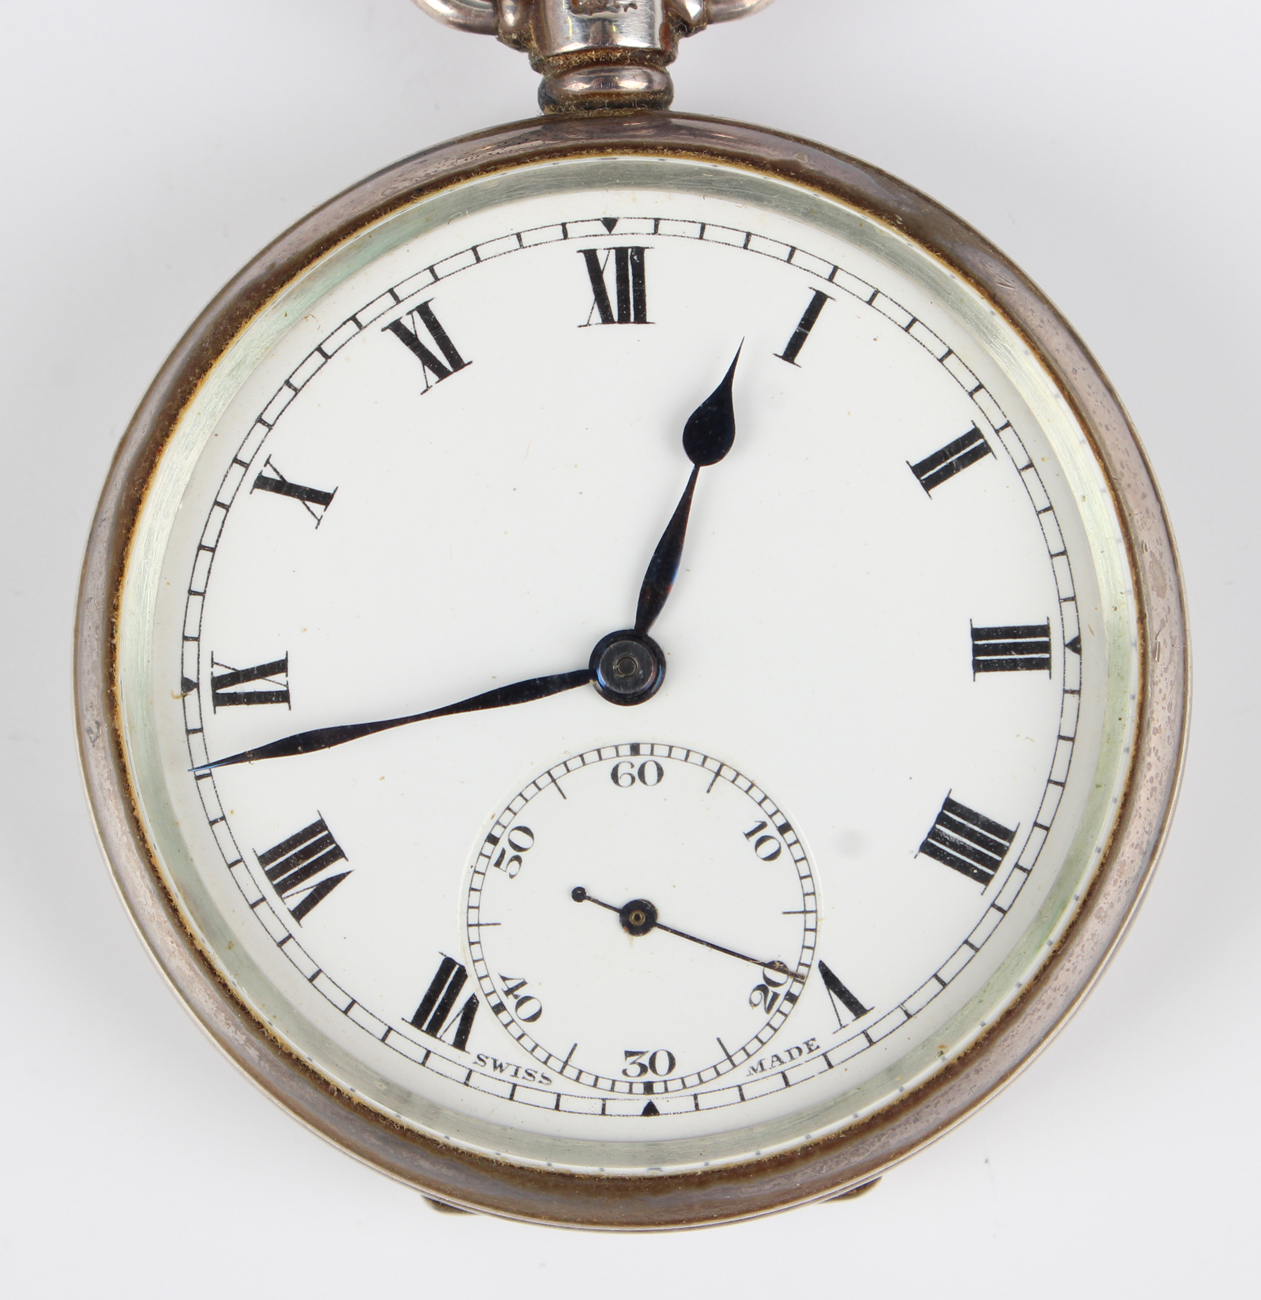 A Buren silver cased lady's wristwatch, import mark London 1921, case diameter 2.8cm, a silver cased - Image 19 of 19